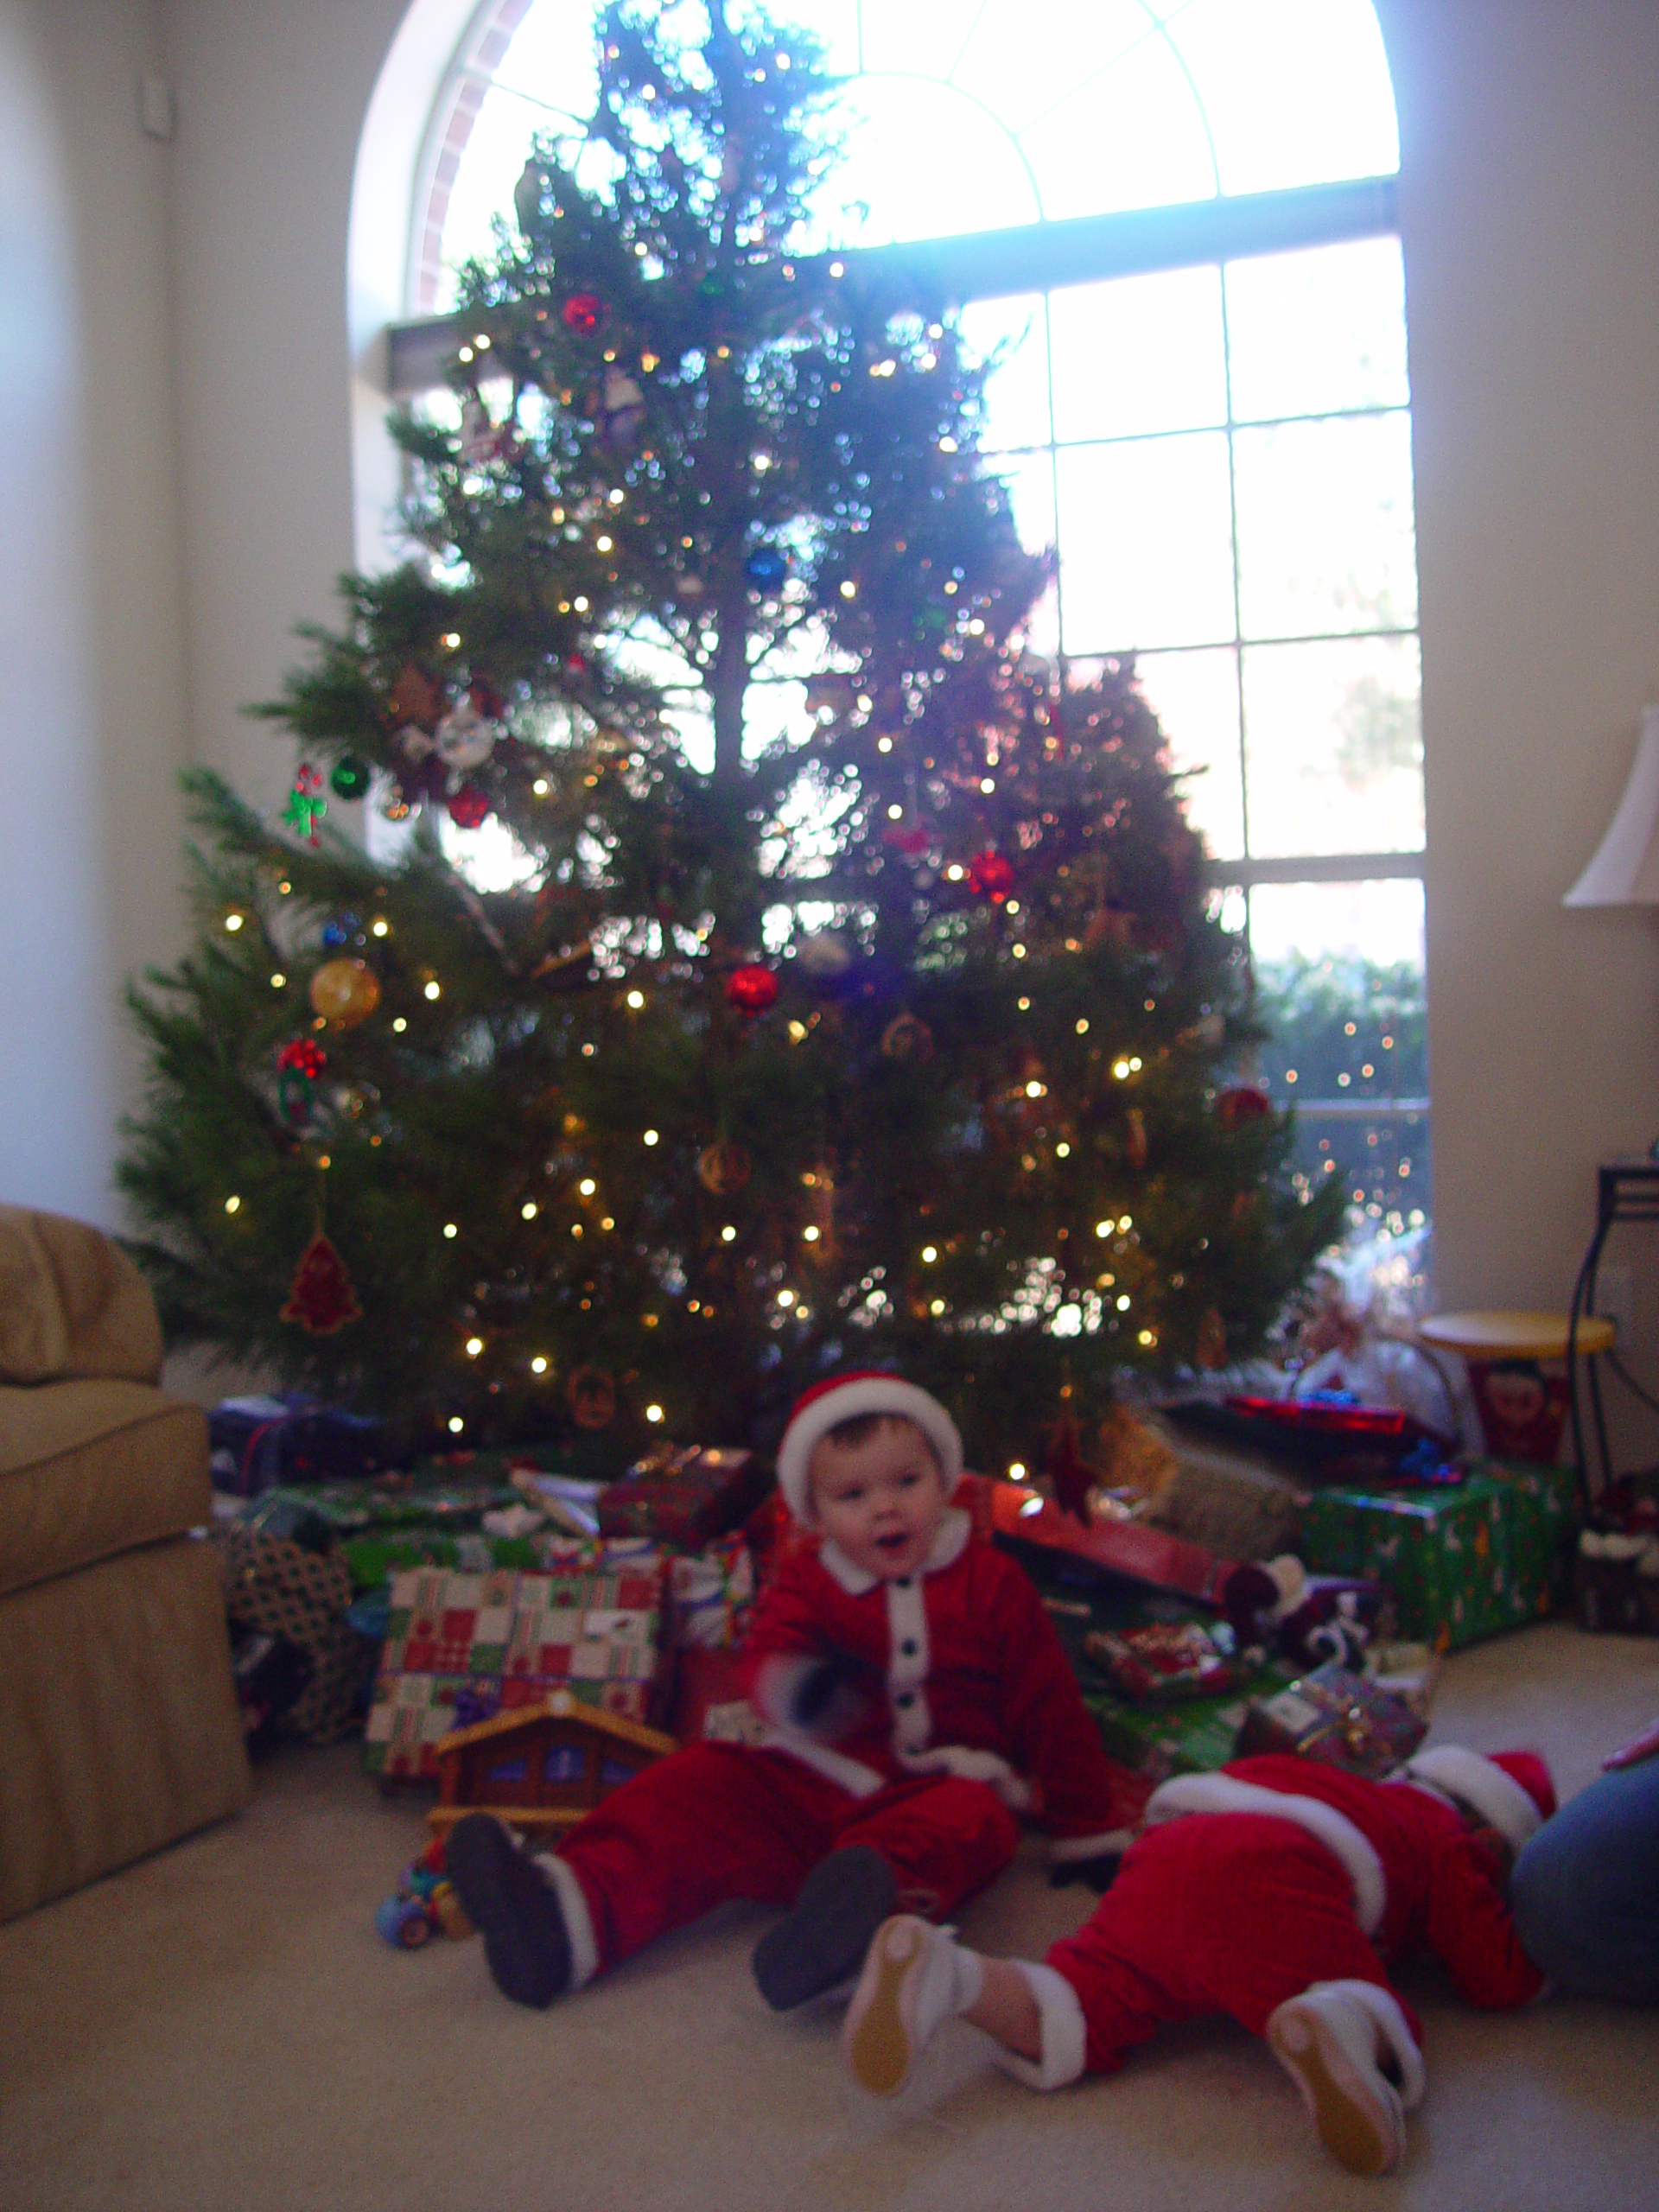 Christmas 2005 - Mr. & Mrs. Santa, Elgin Sausage, Christmas Tree Farm